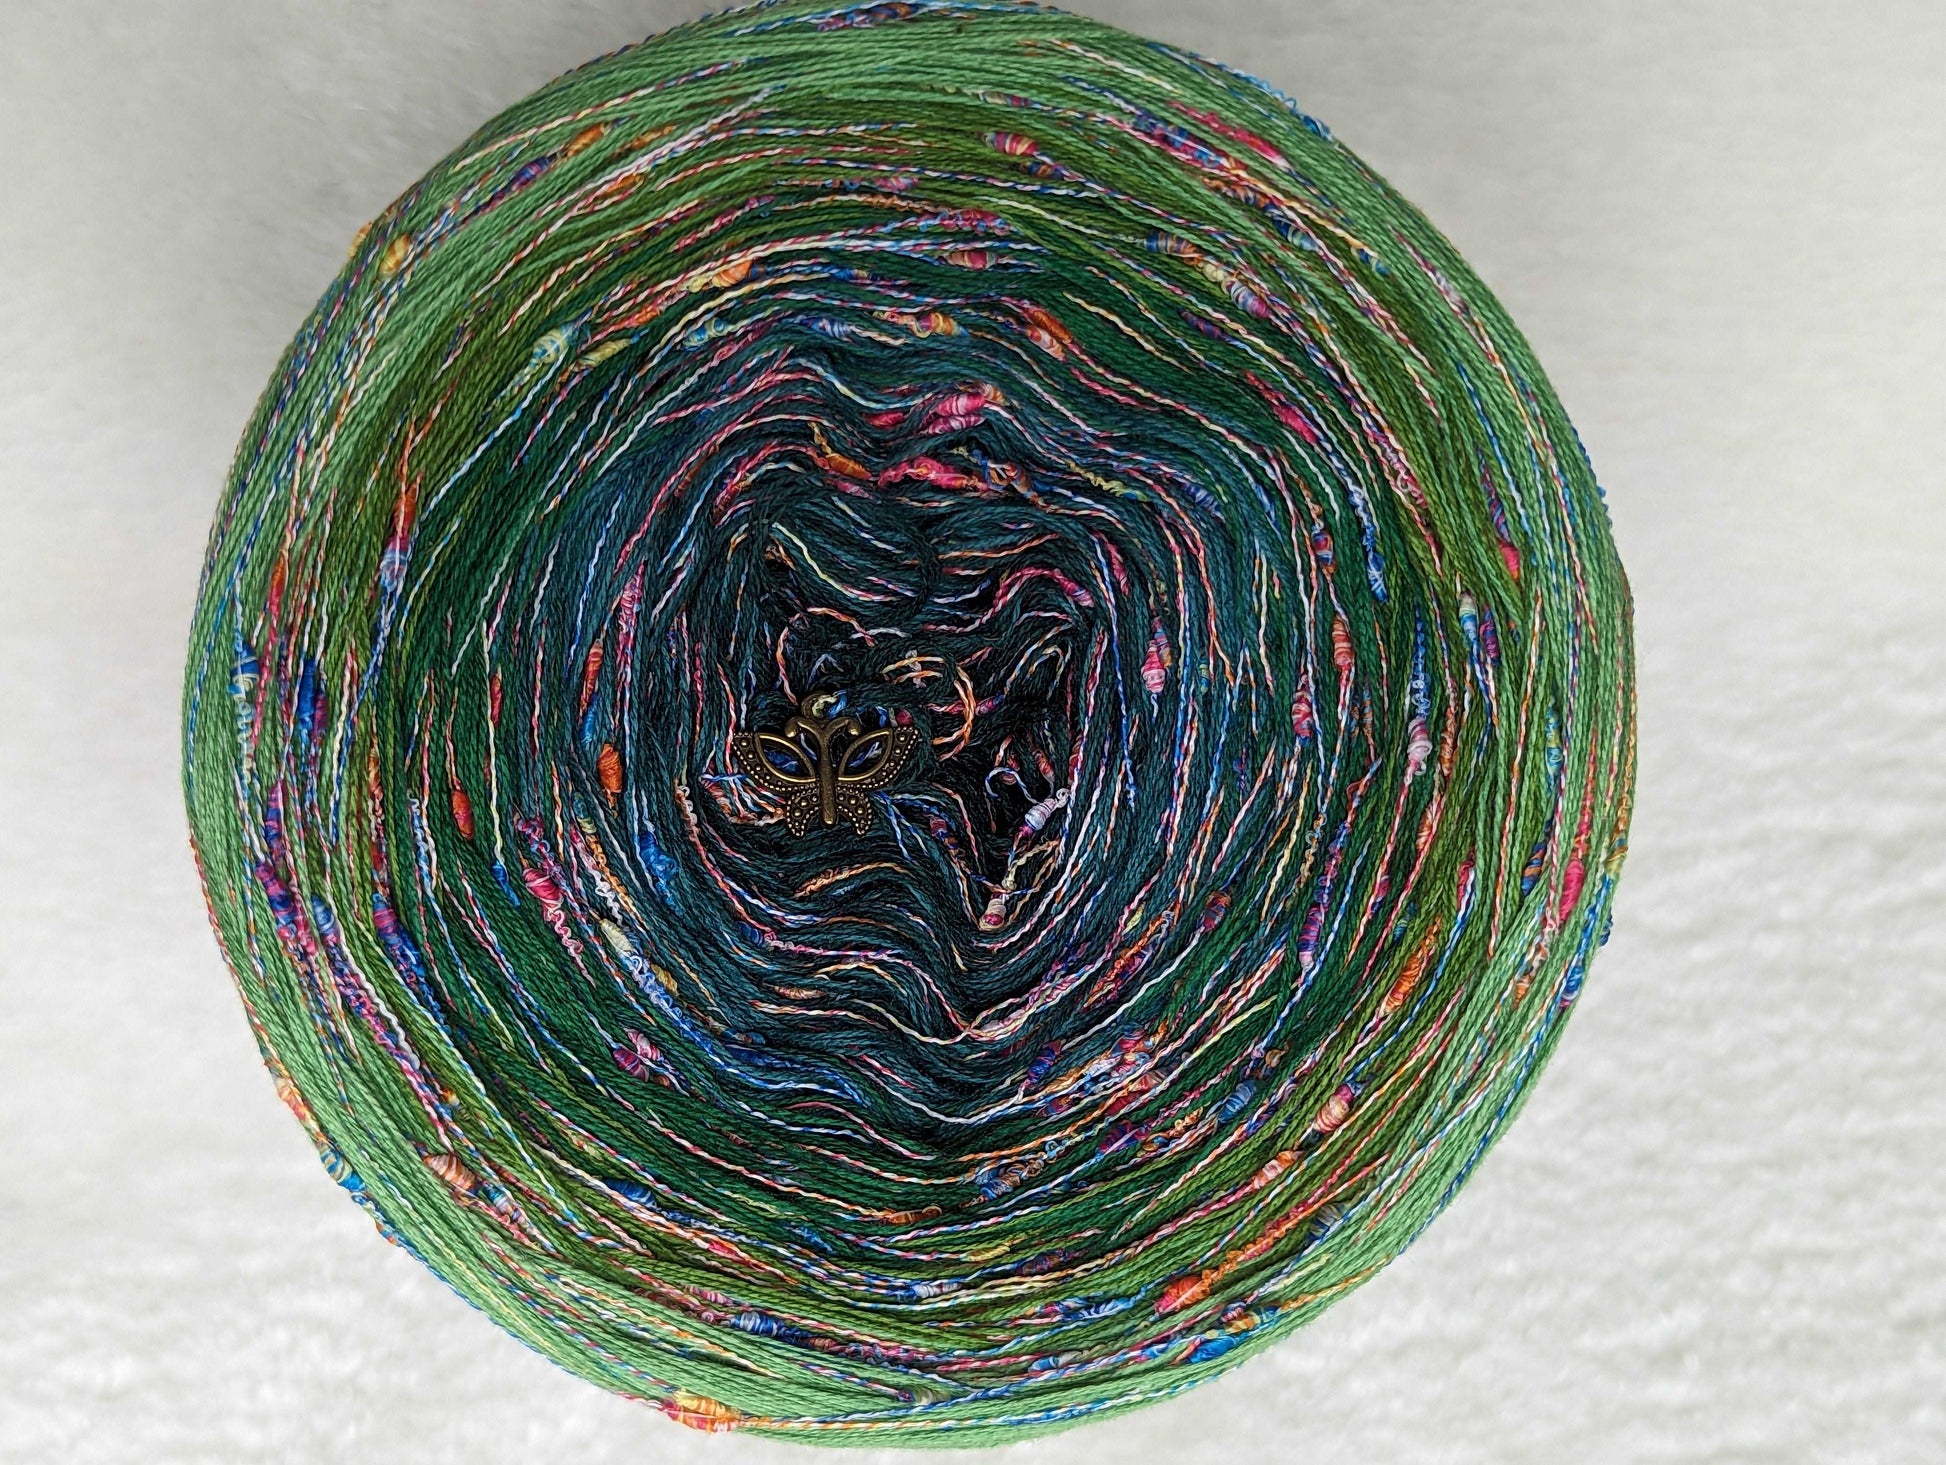 " Wild meadow" cotton/acrylic ombre yarn cake